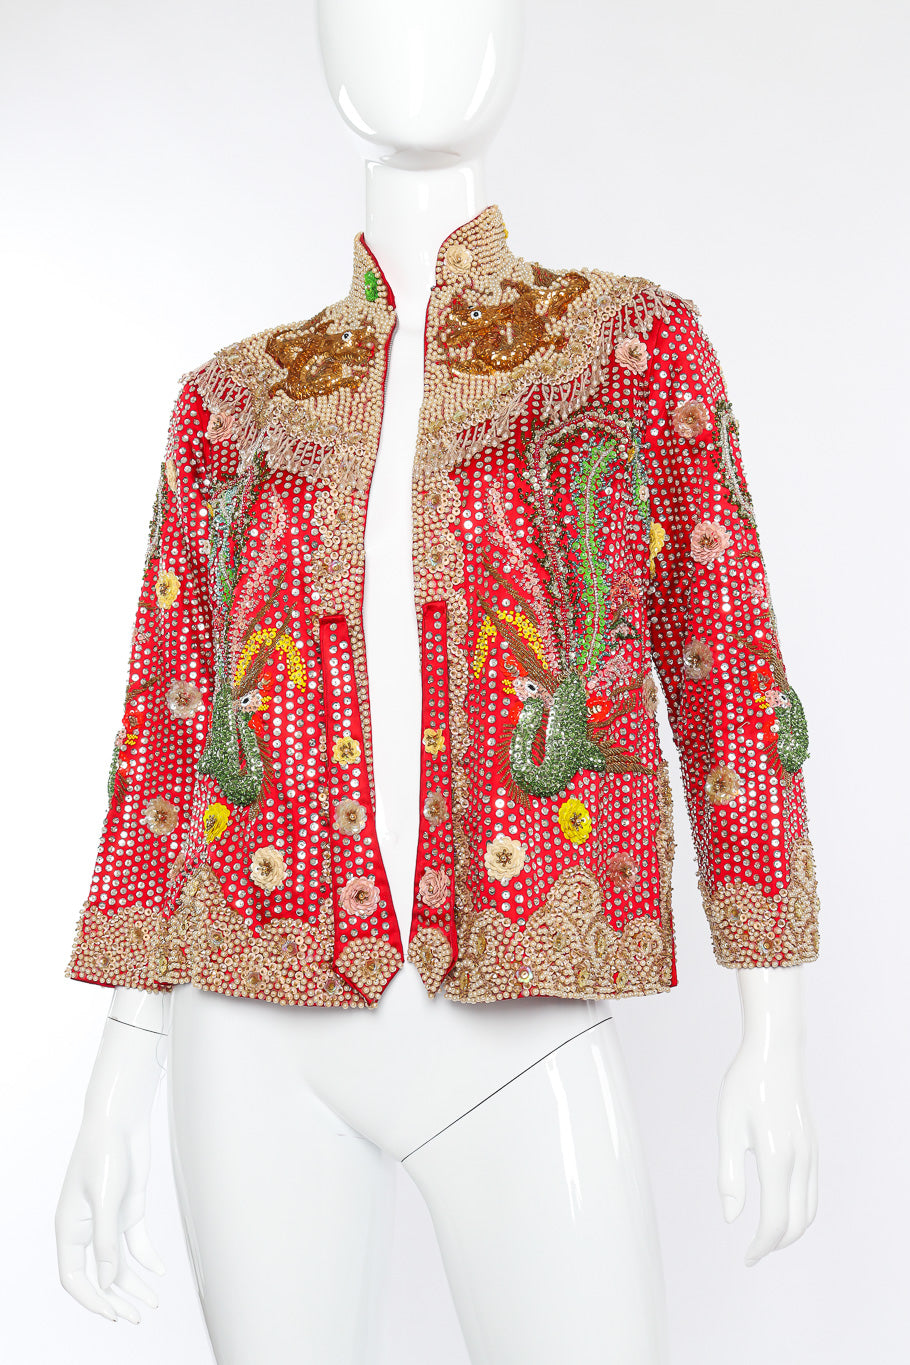 Vintage Dynasty Sequin Dragon Silk Jacket front view closeup on mannequin @Recessla 